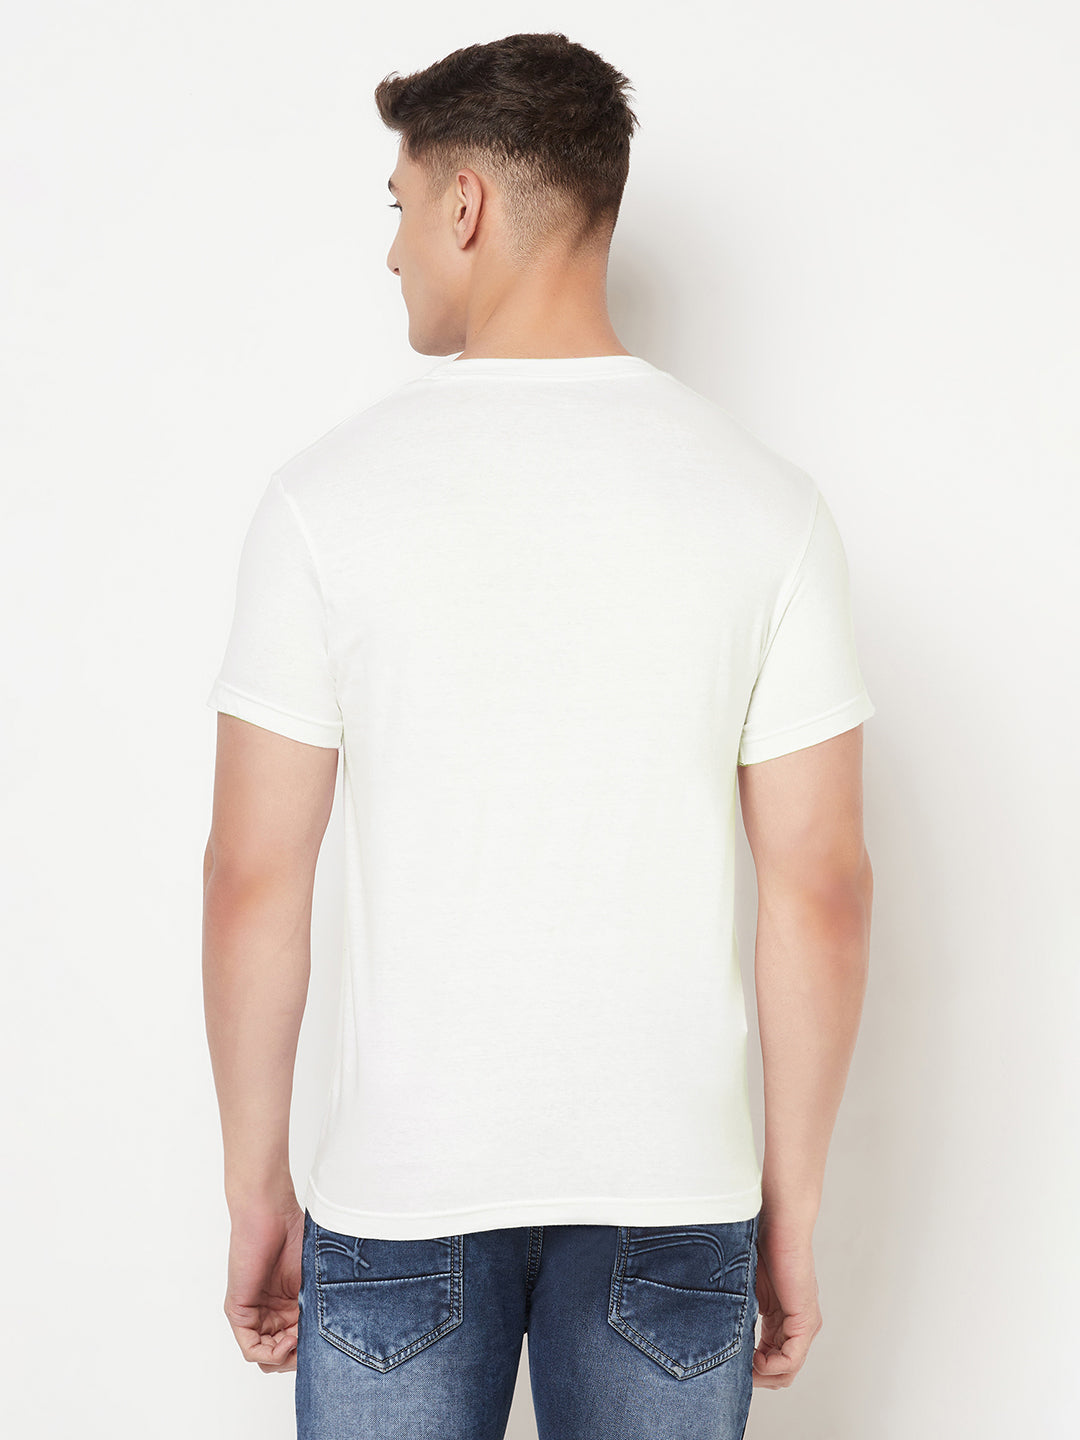 Premium Cotton Tshirts  (Pack of 3- White,Grey,Green)